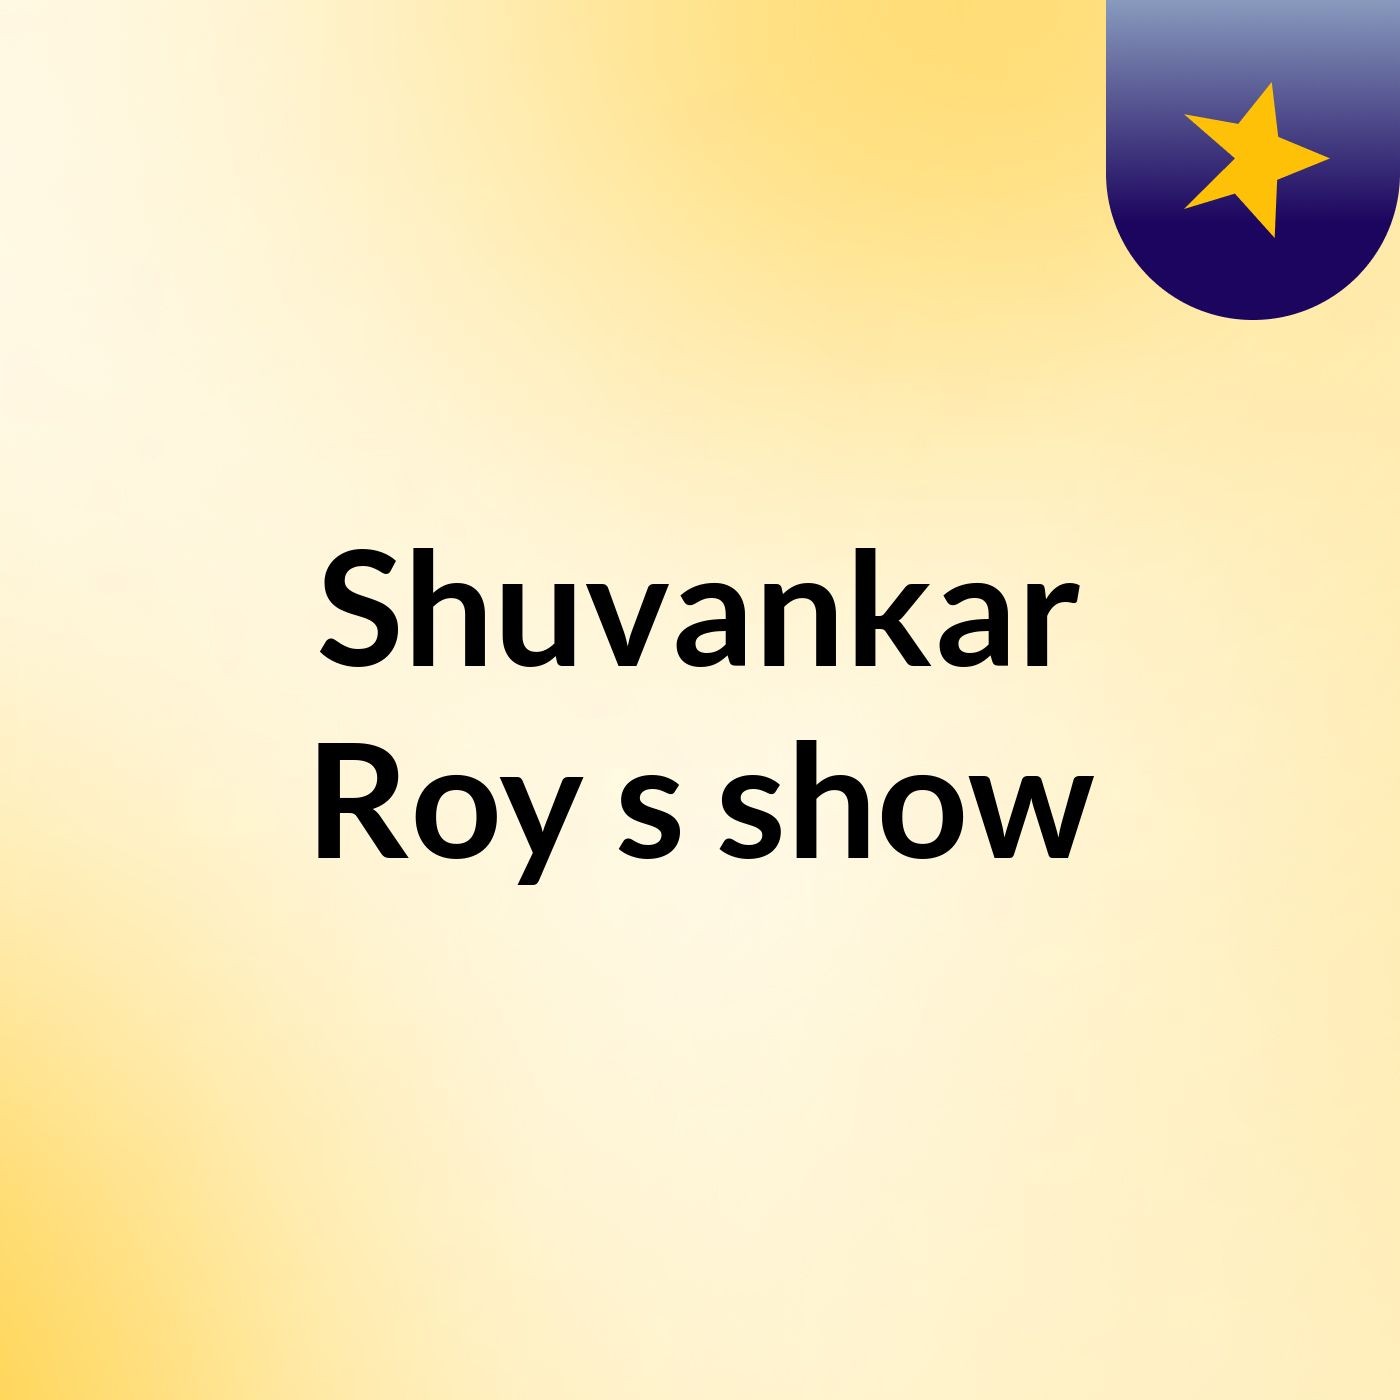 Shuvankar Roy's show